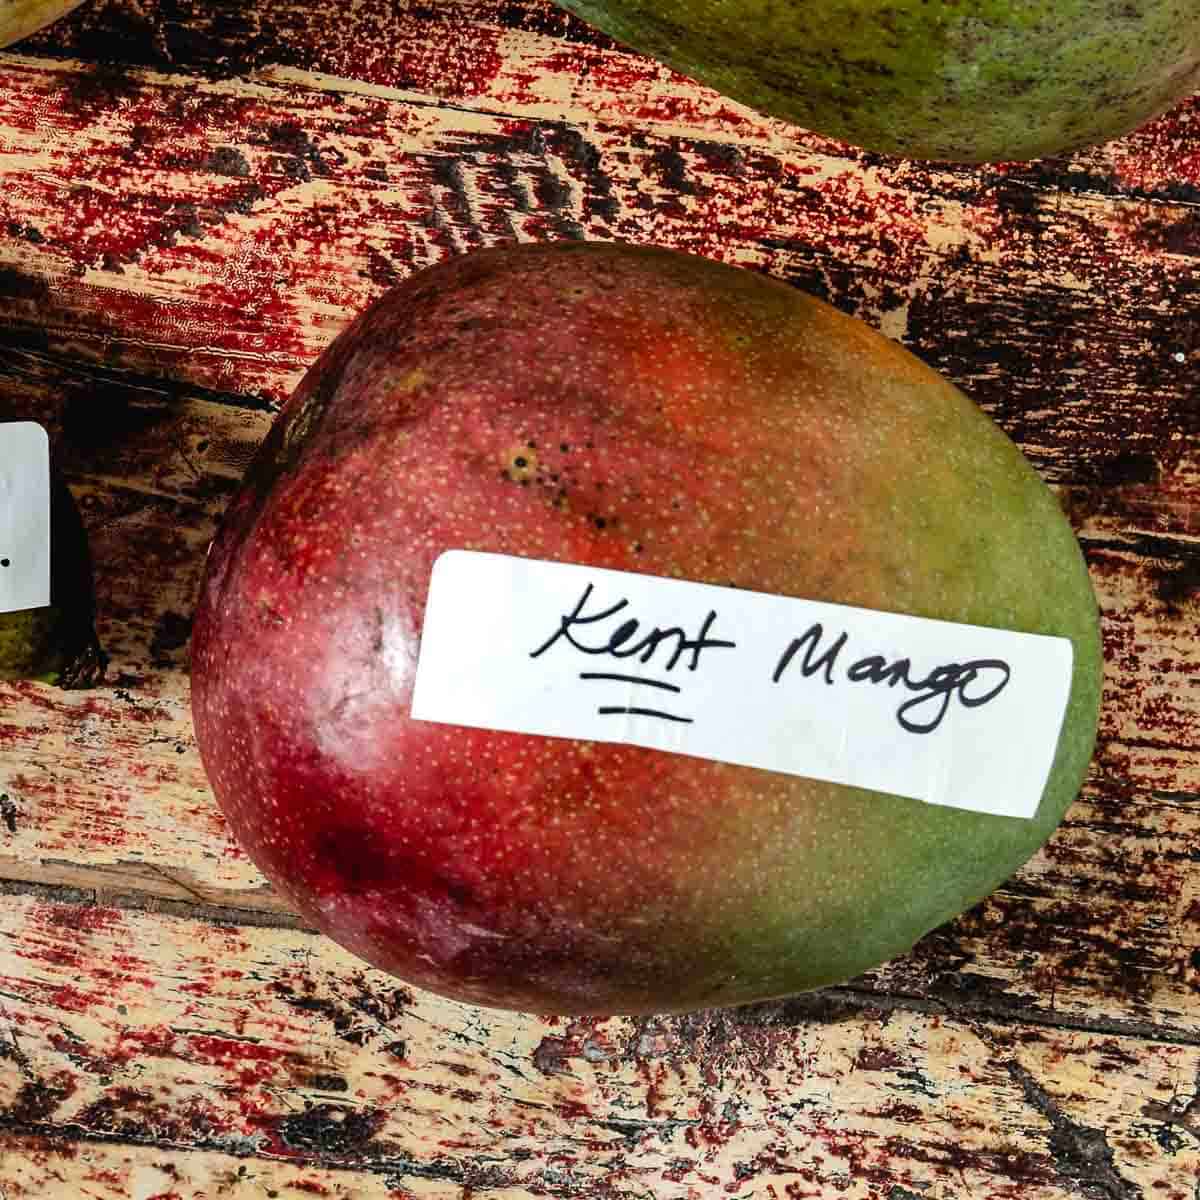 Kent Mango.